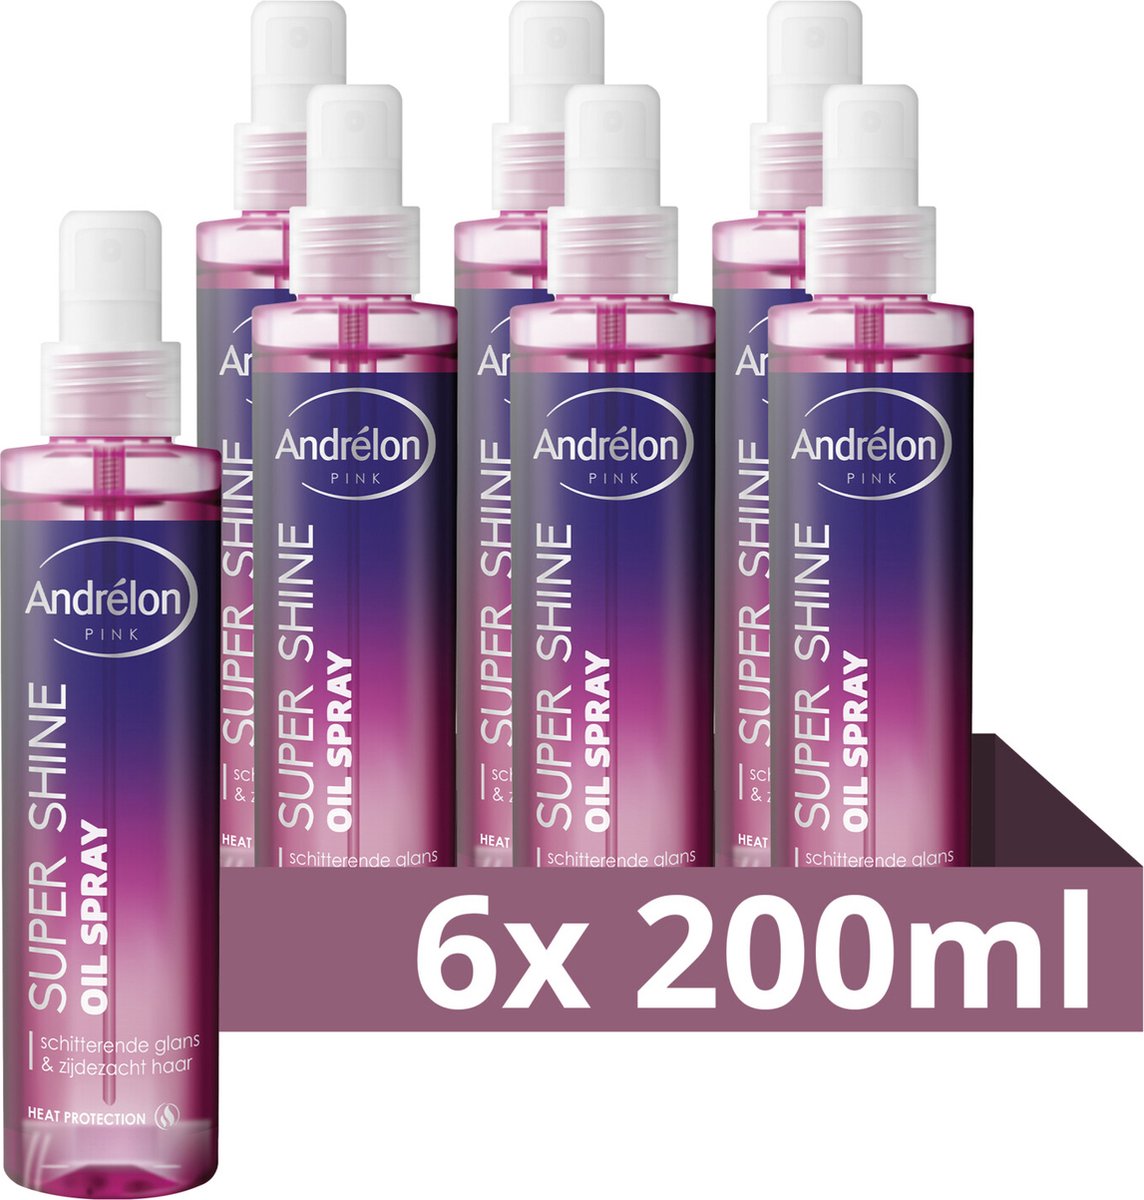 Andrelon Pink Oil Spray - Super Shine - haarspray, beschermt tegen hitte van de föhn of styling tools - 6 x 200 ml